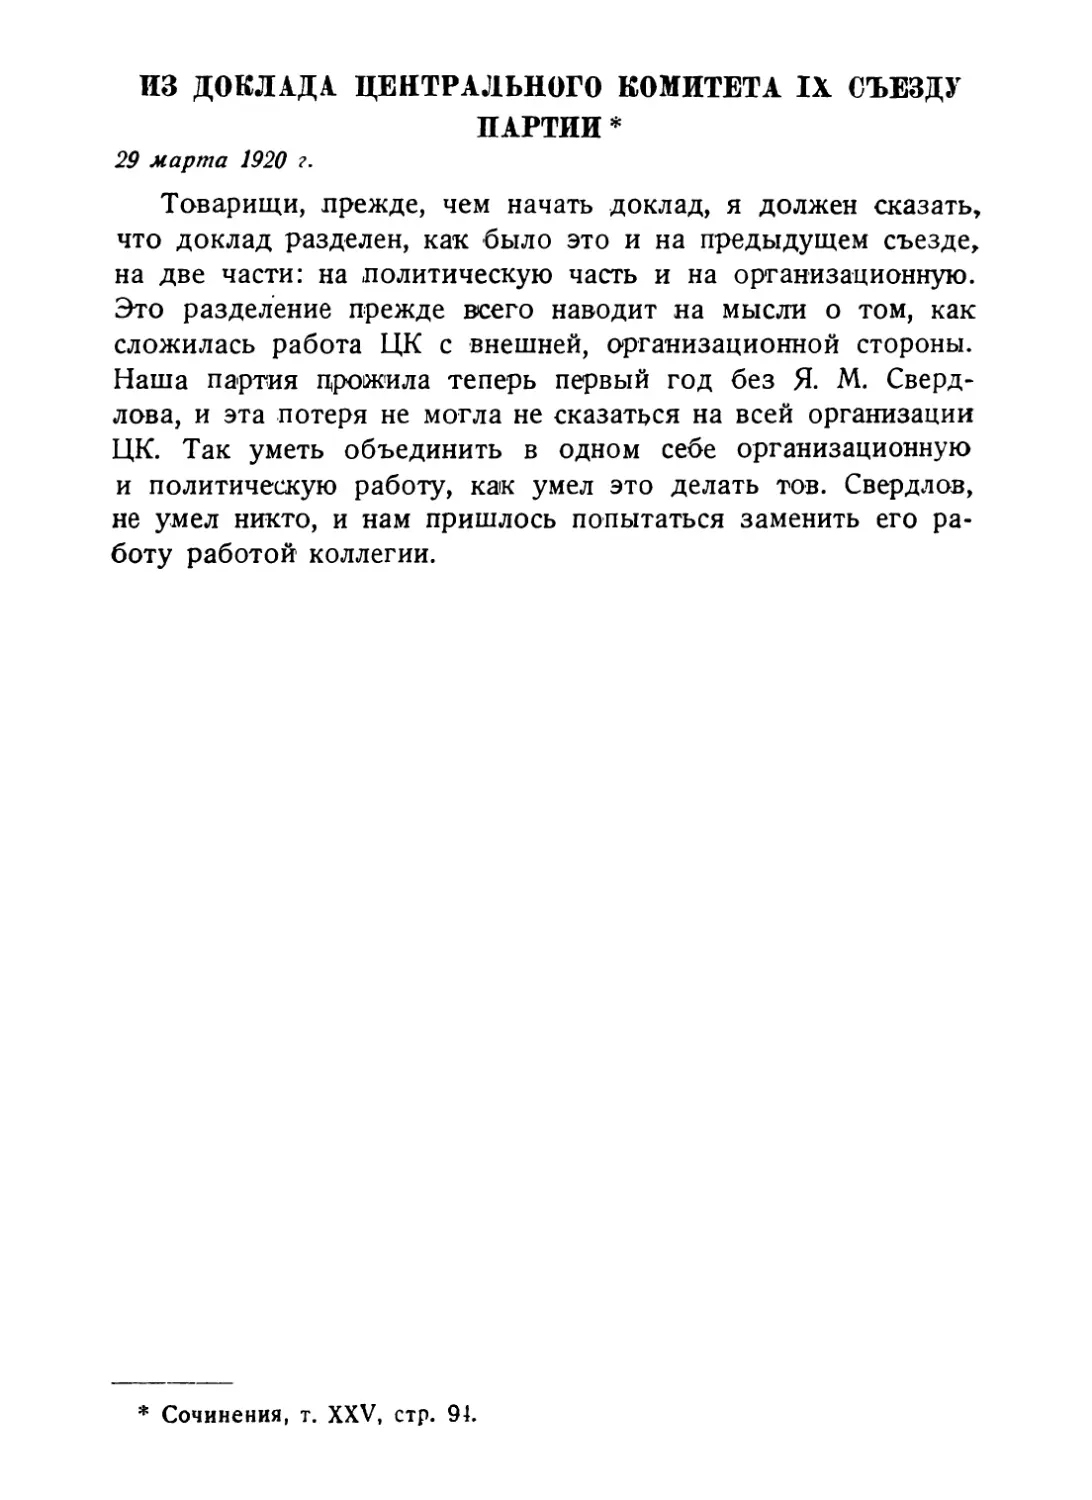 Из доклада Центрального комитета IX съезду партии, 29 марта 1920 г.